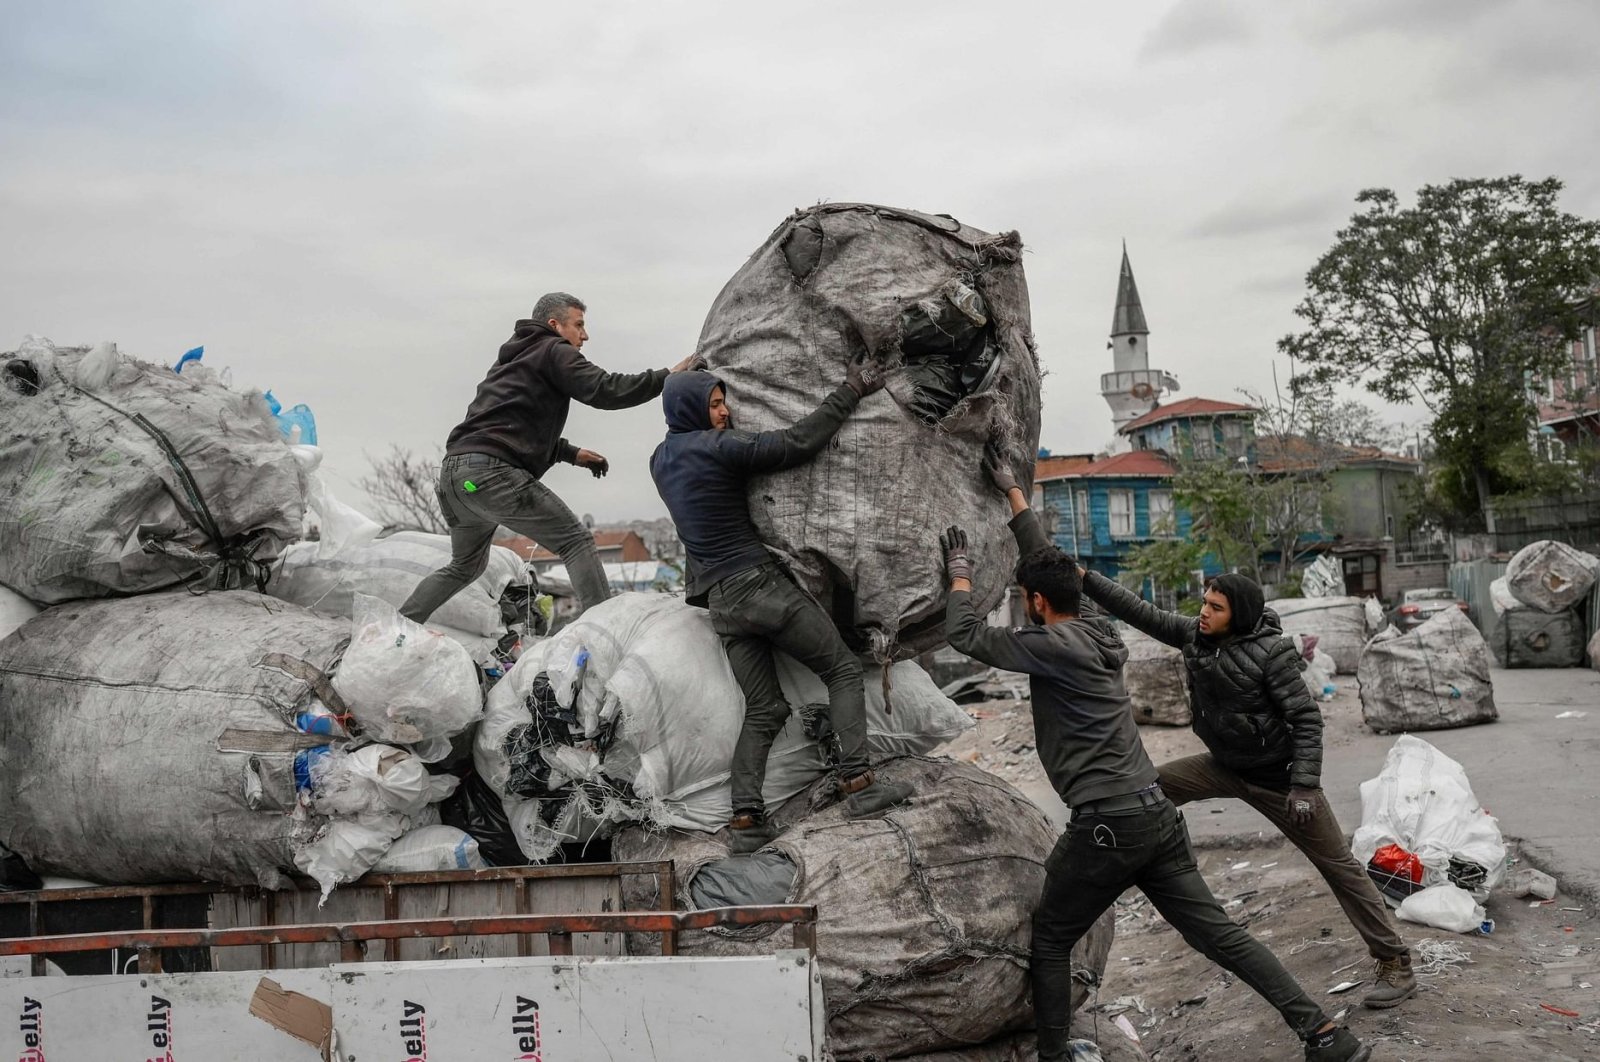 Upaya para migran menawarkan bantuan penting dalam mendaur ulang limbah Istanbul